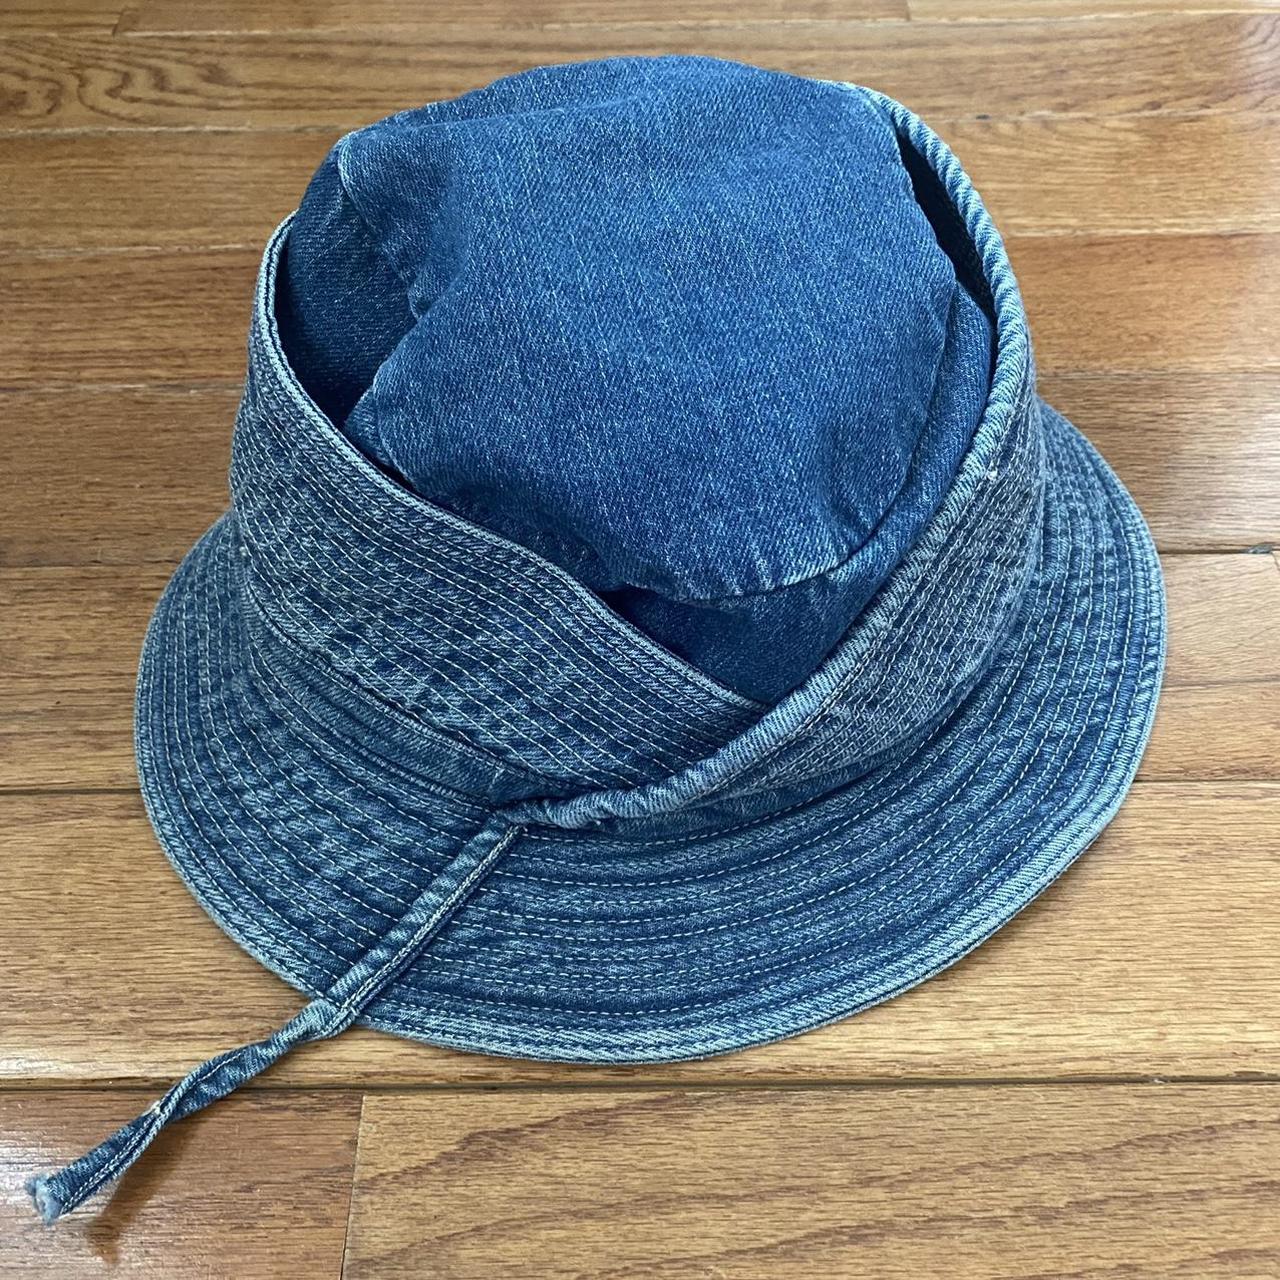 Kapital Hat One size fits most 100% Cotton Denim... - Depop